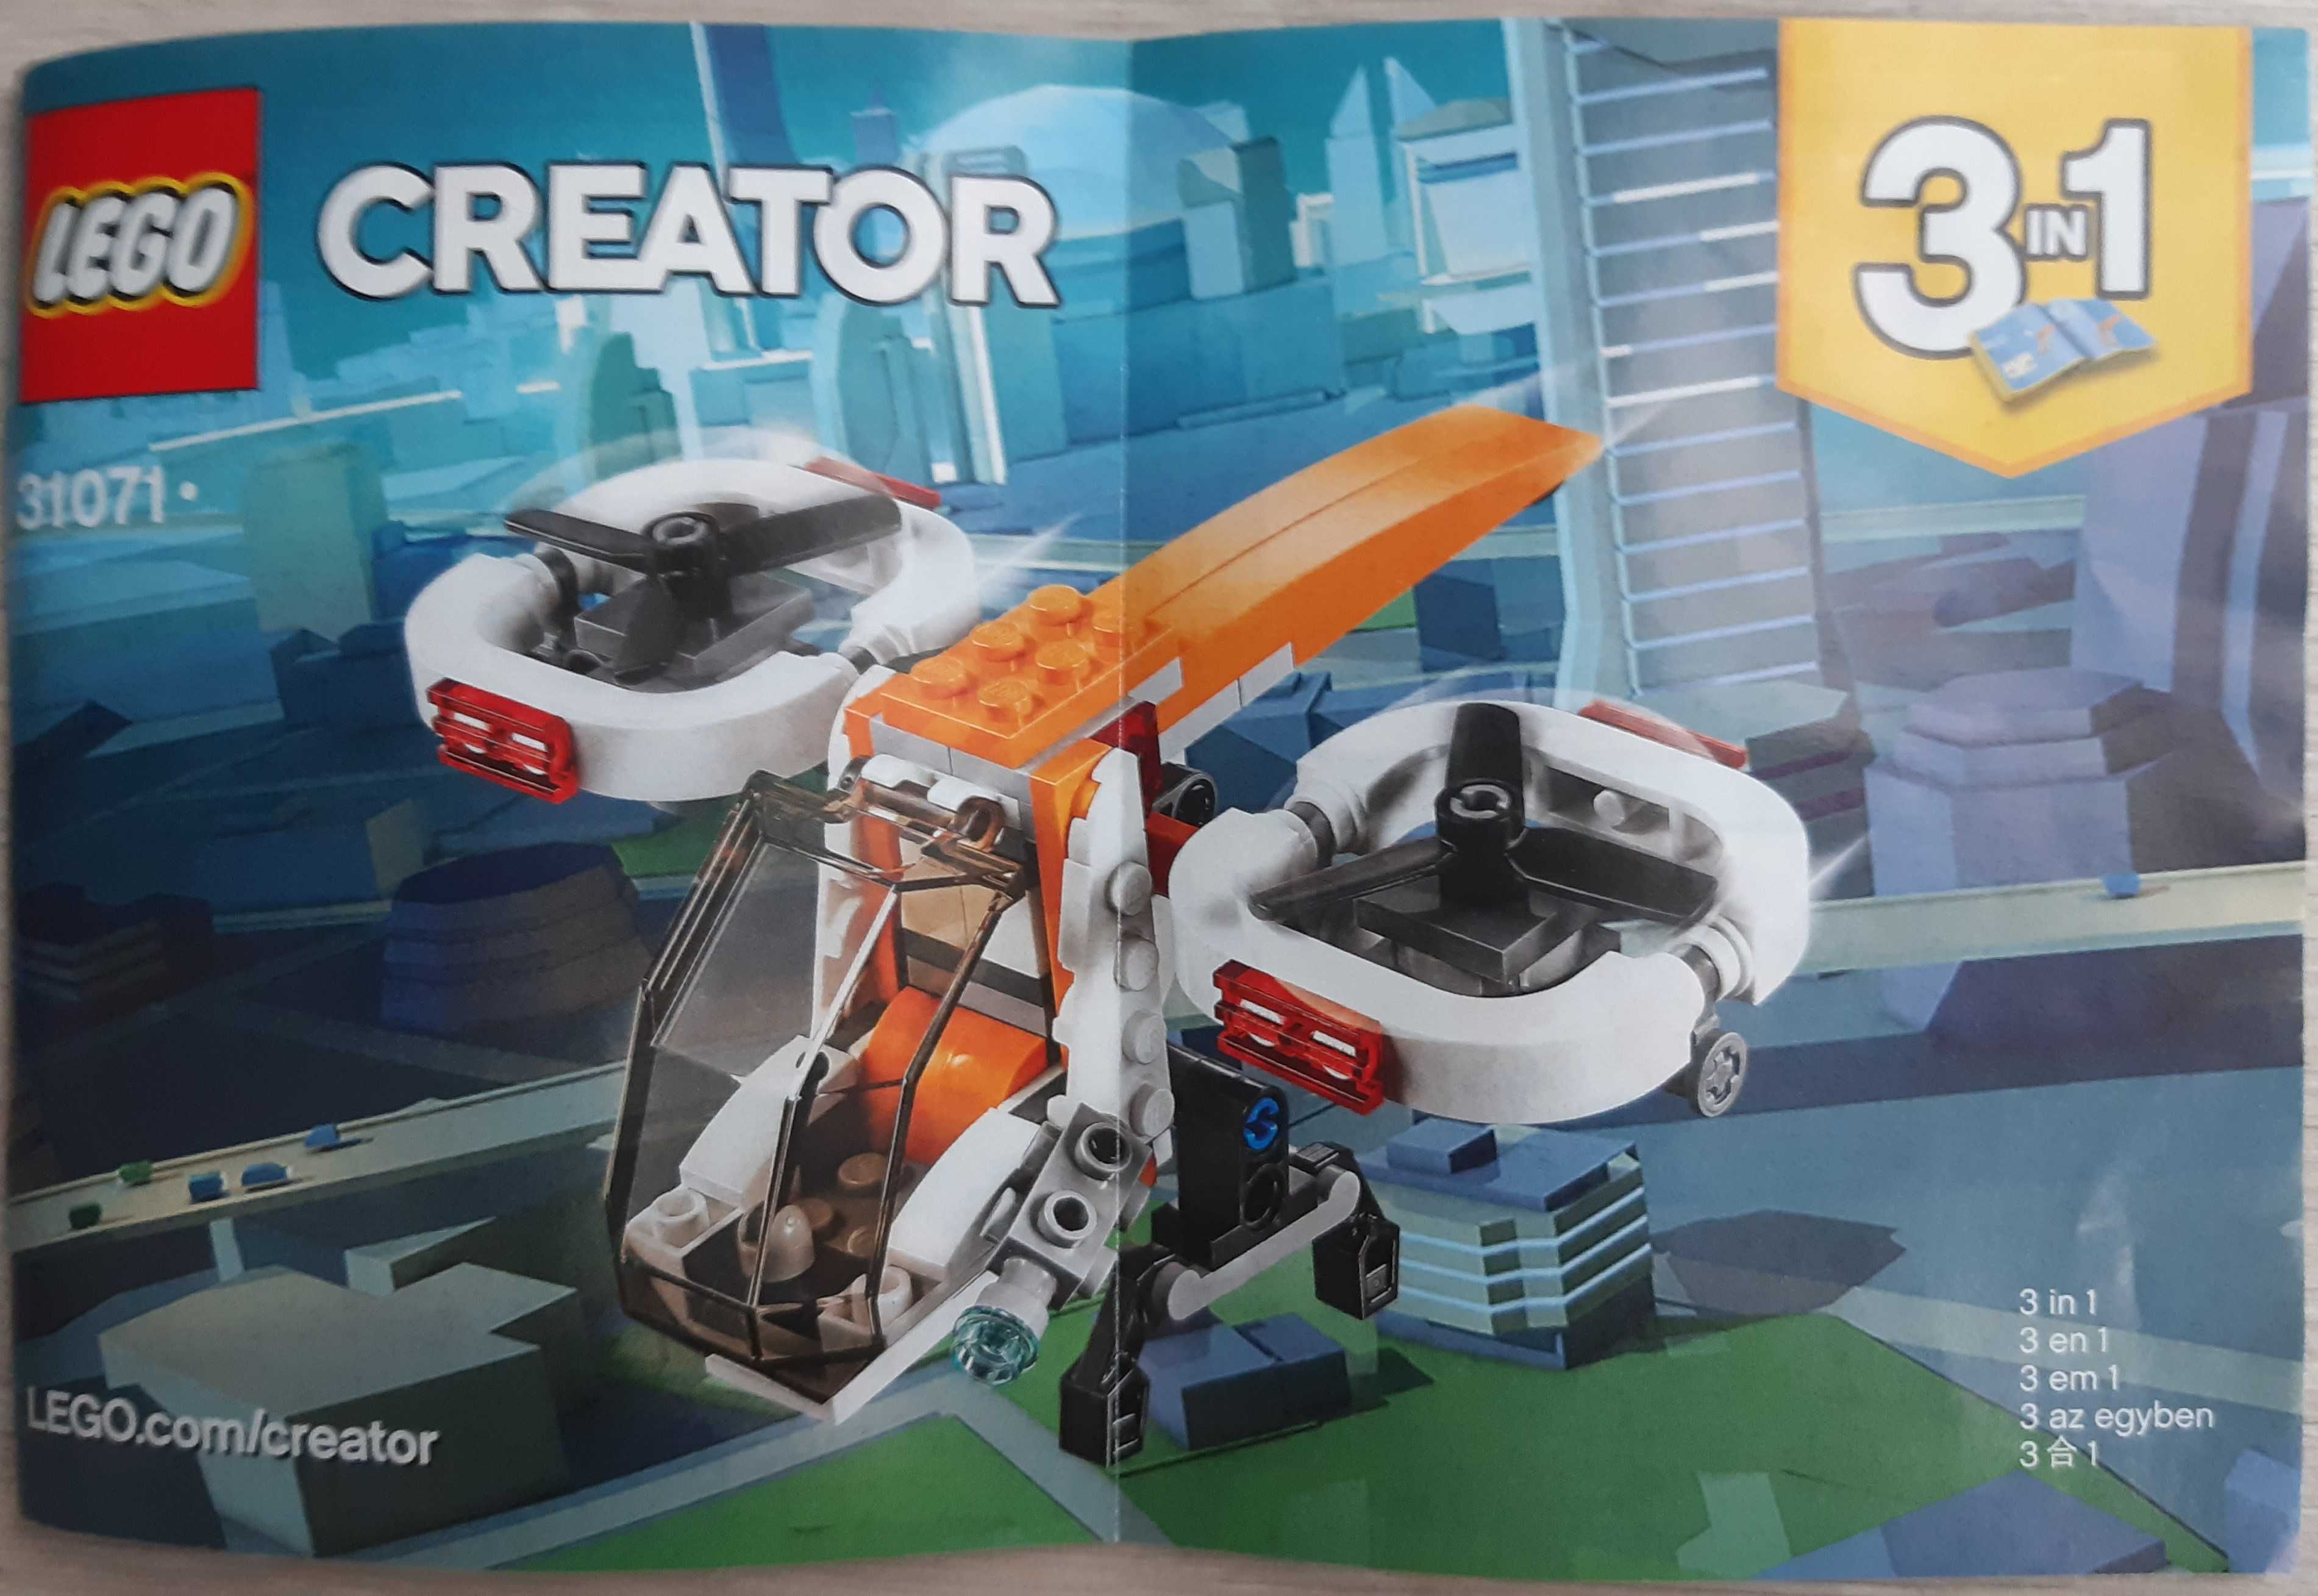 Lego CREATOR 31071 - Dron Explorer